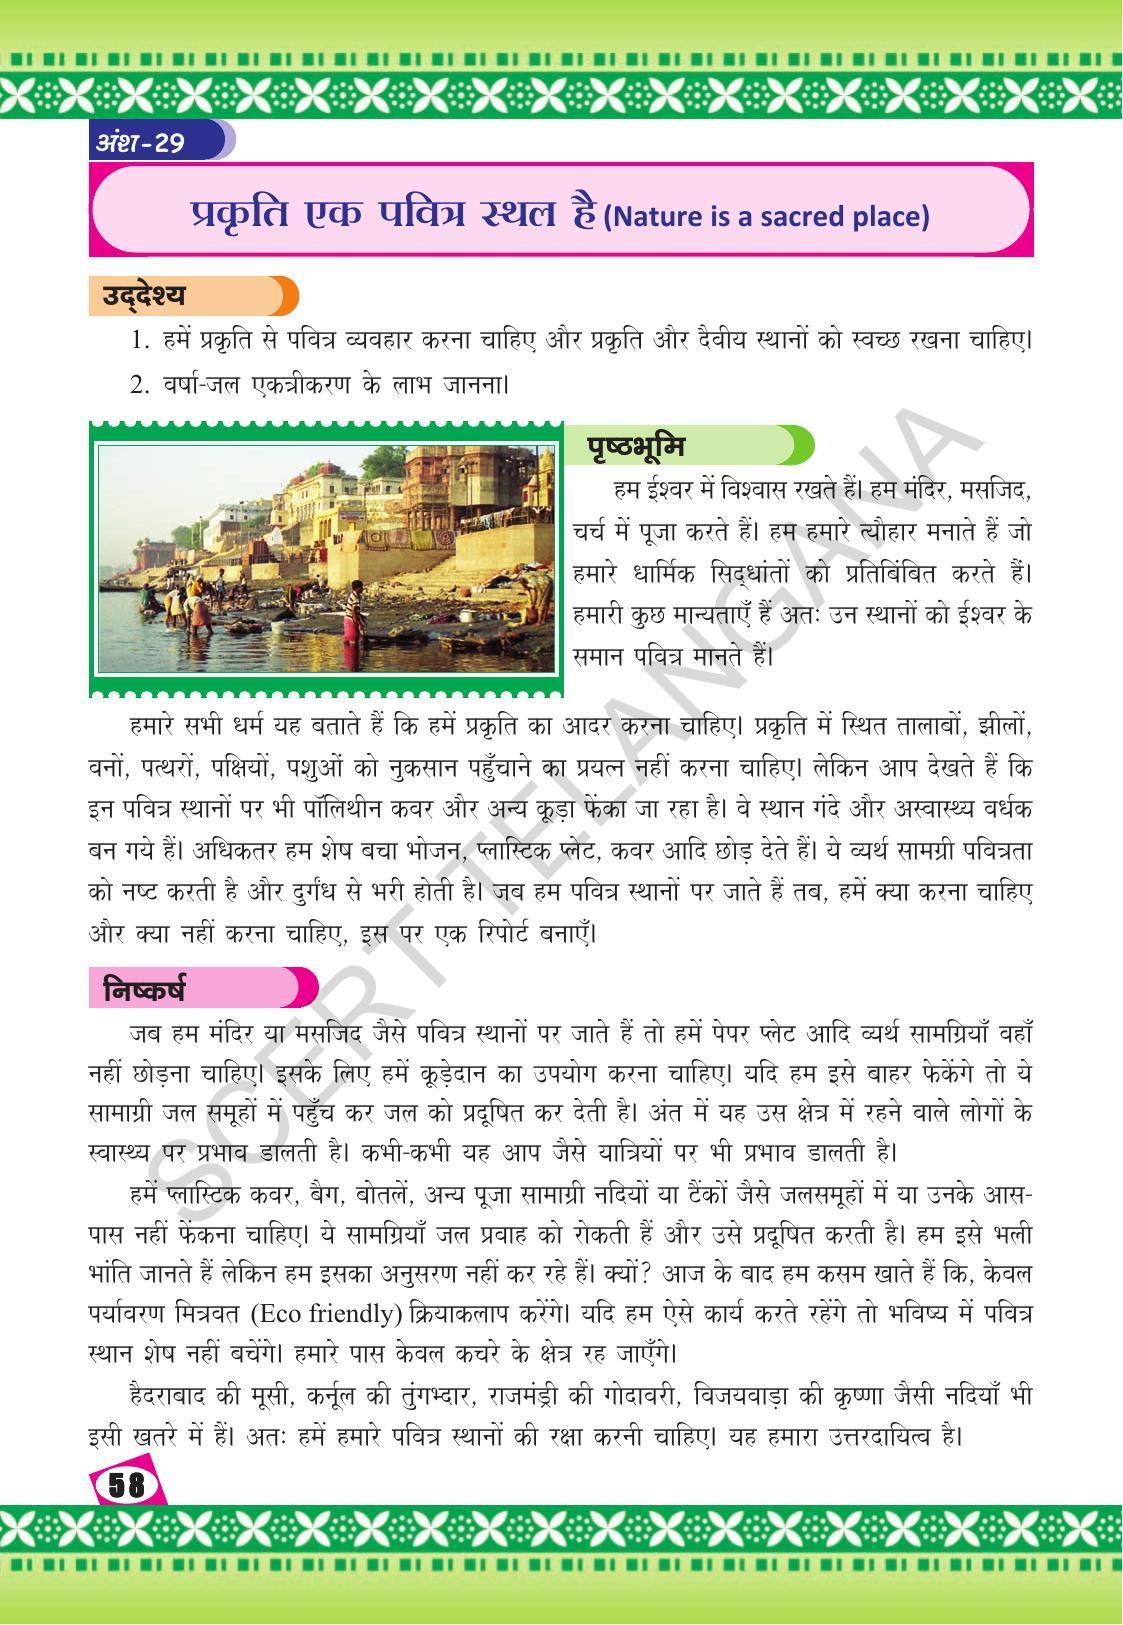 TS SCERT Class 10 Social Environmental Education (Hindi Medium) Text Book - Page 66